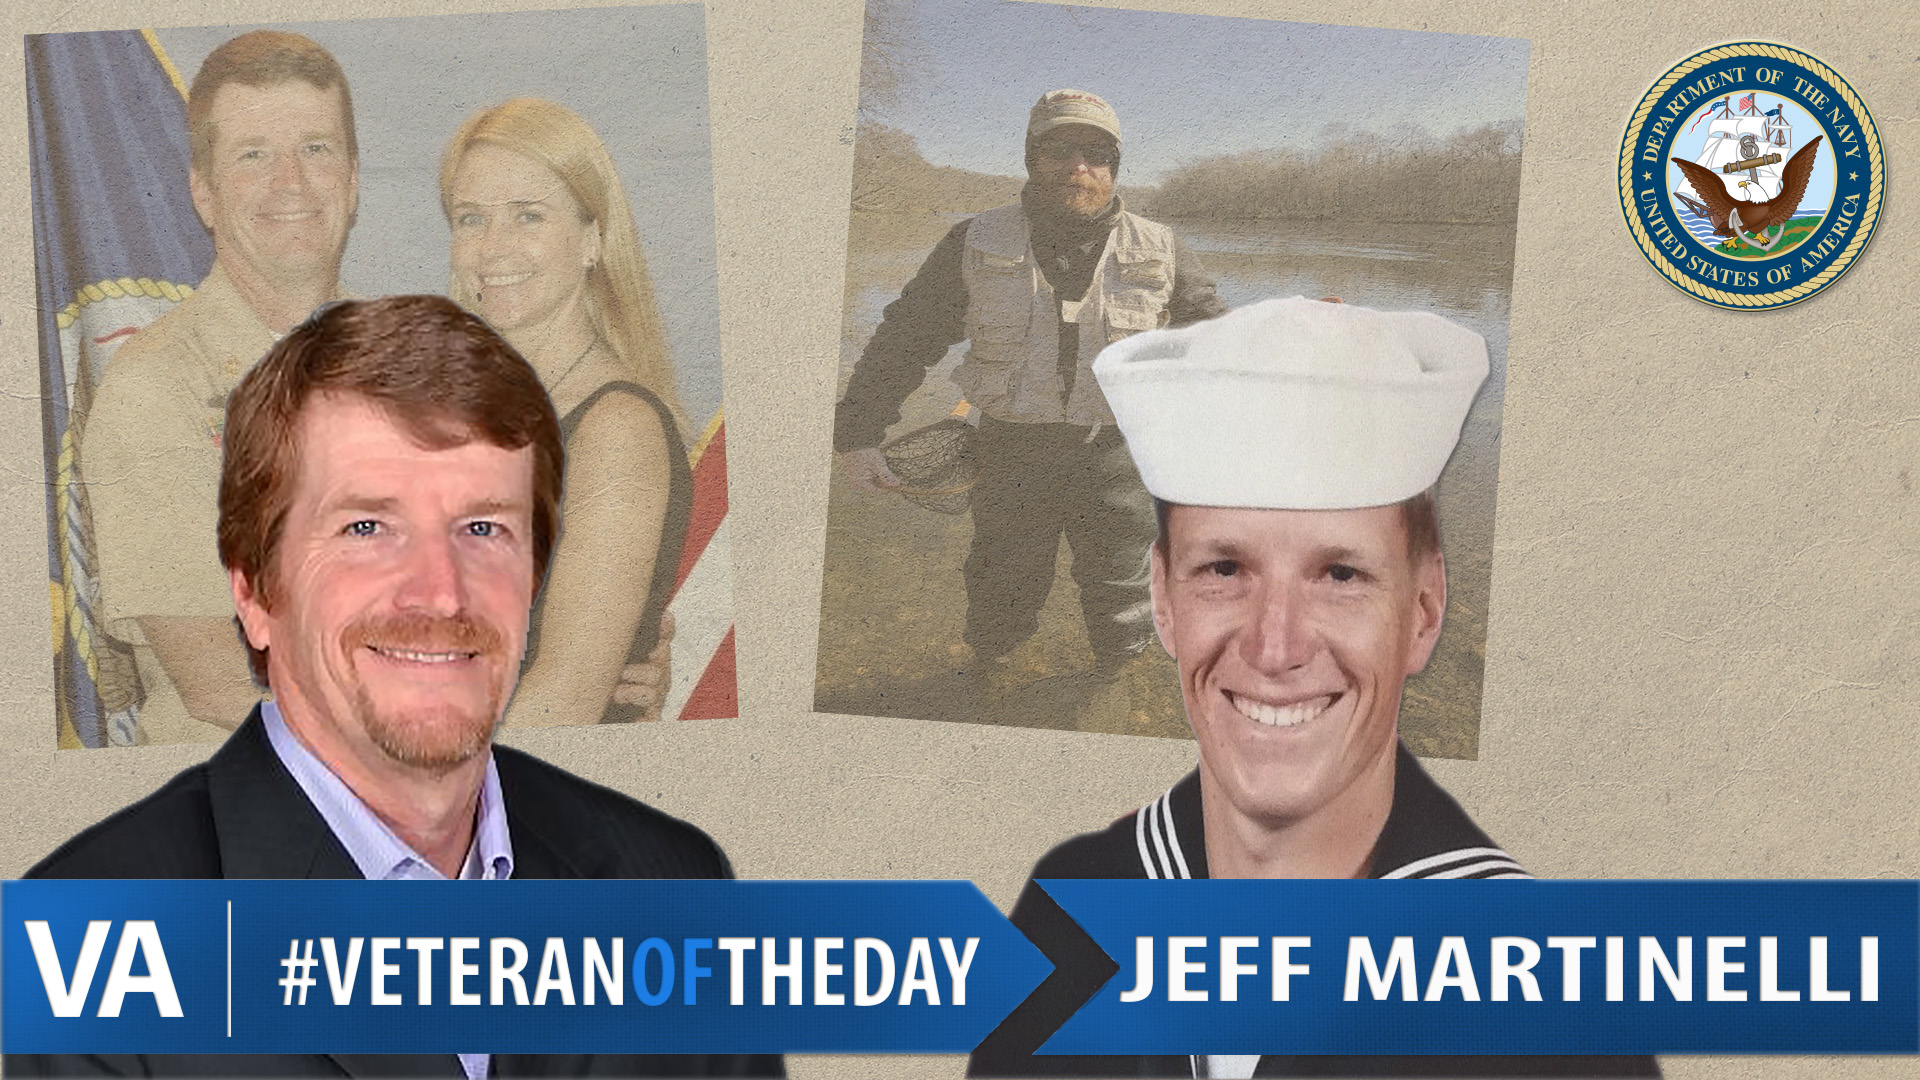 Jeff Martinelli - Veteran of the Day